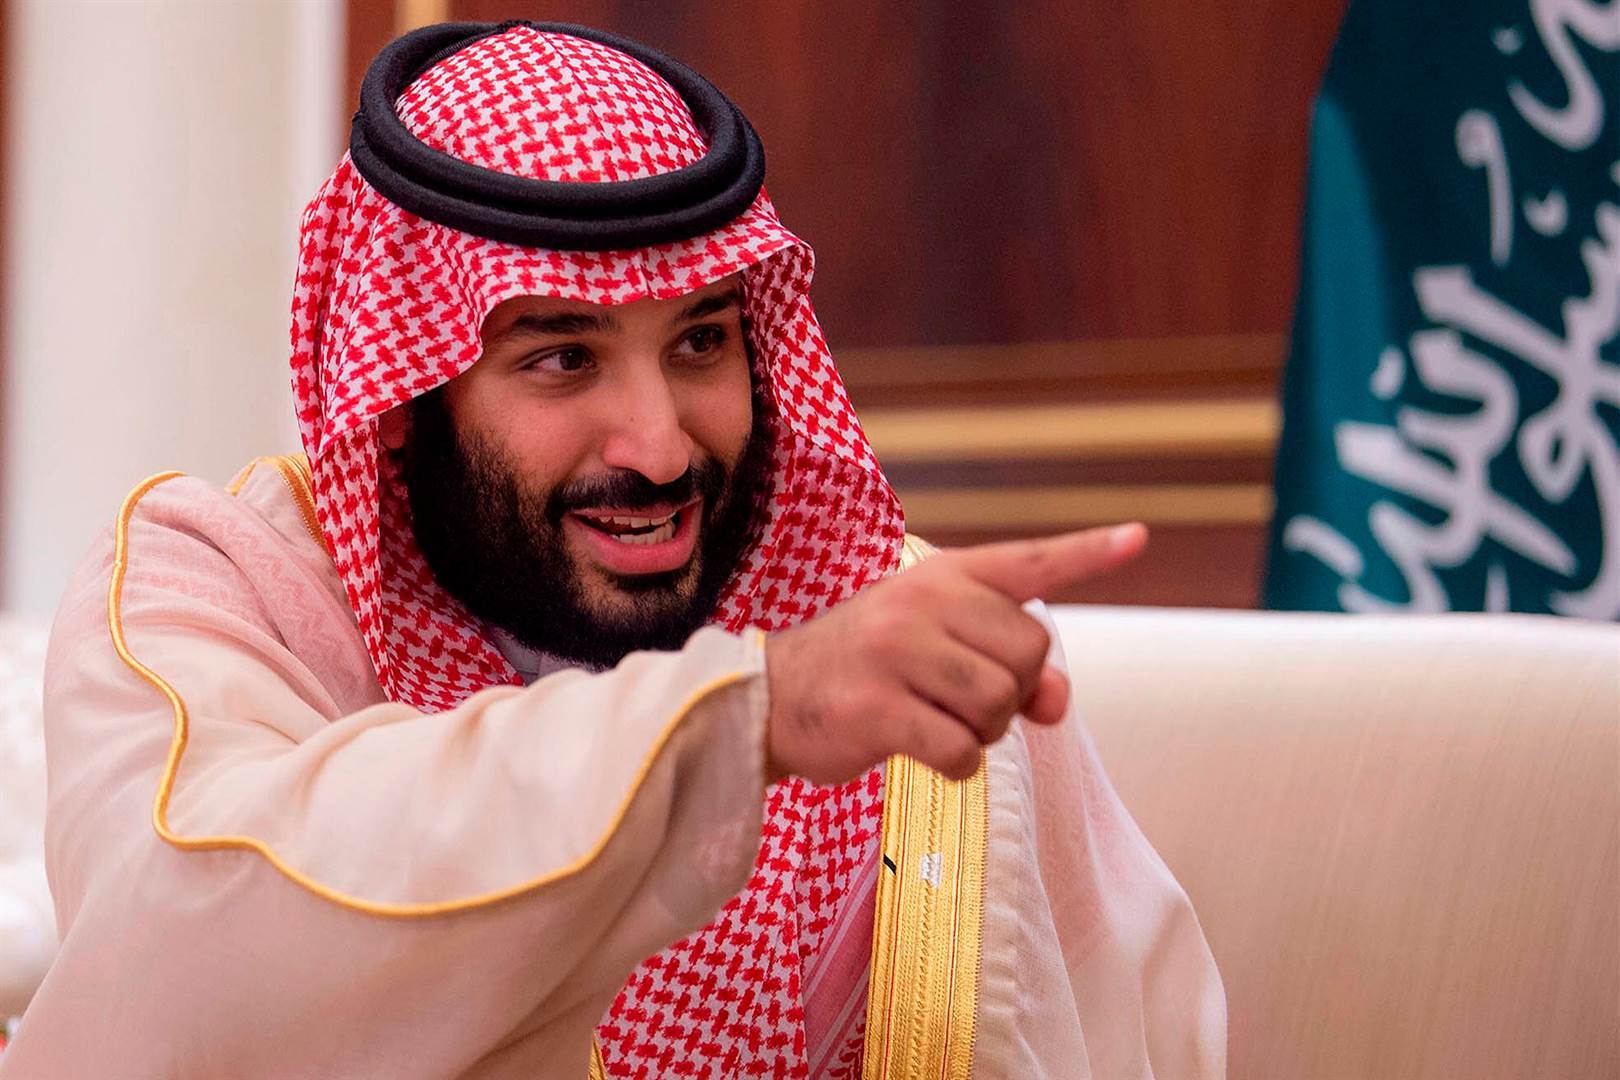 The Saudi Arabia backed consortium has reportedly 